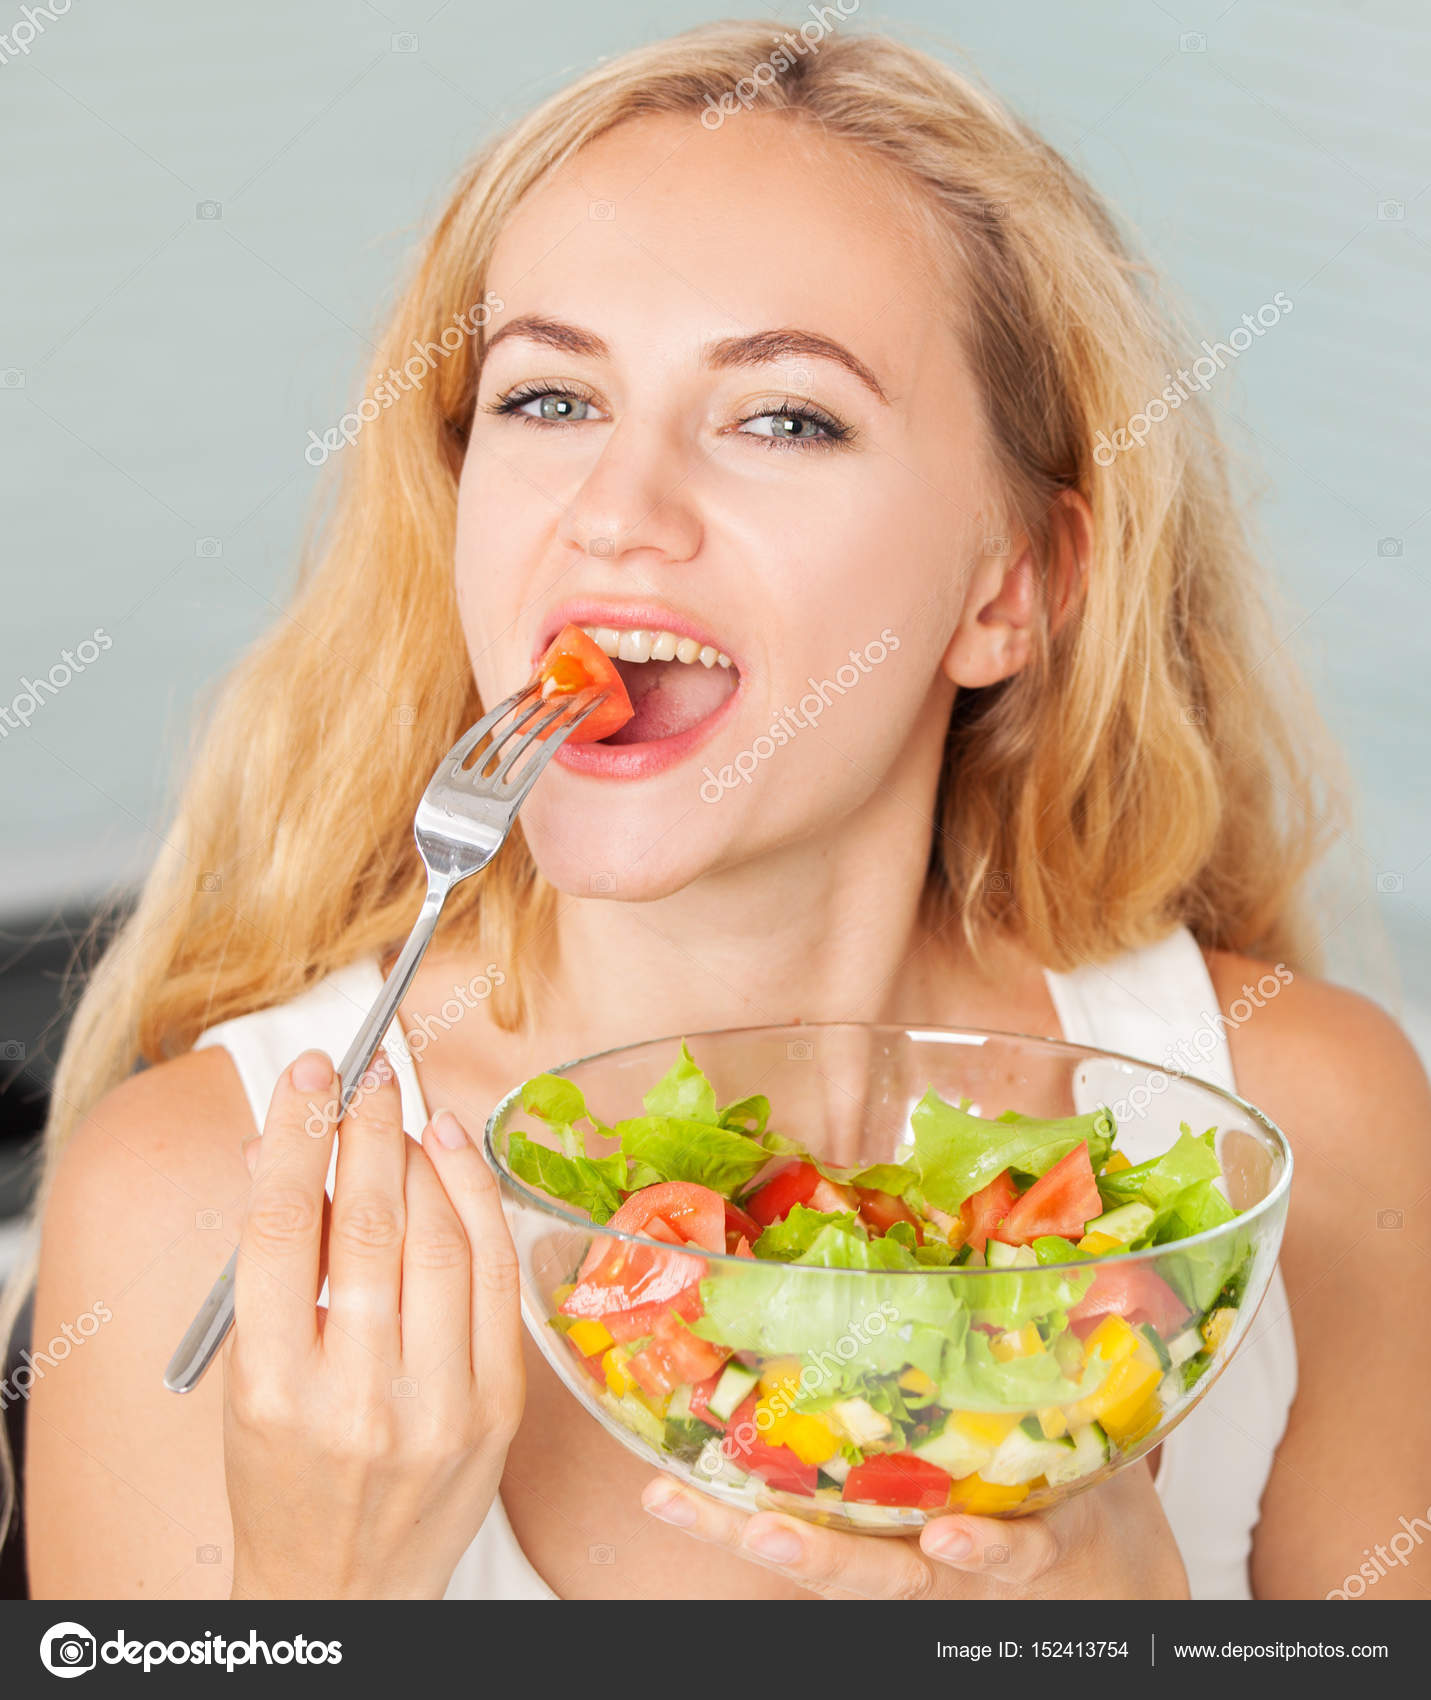 Young woman eating vegetable salad — Stock Photo © TatyanaGl #152413754